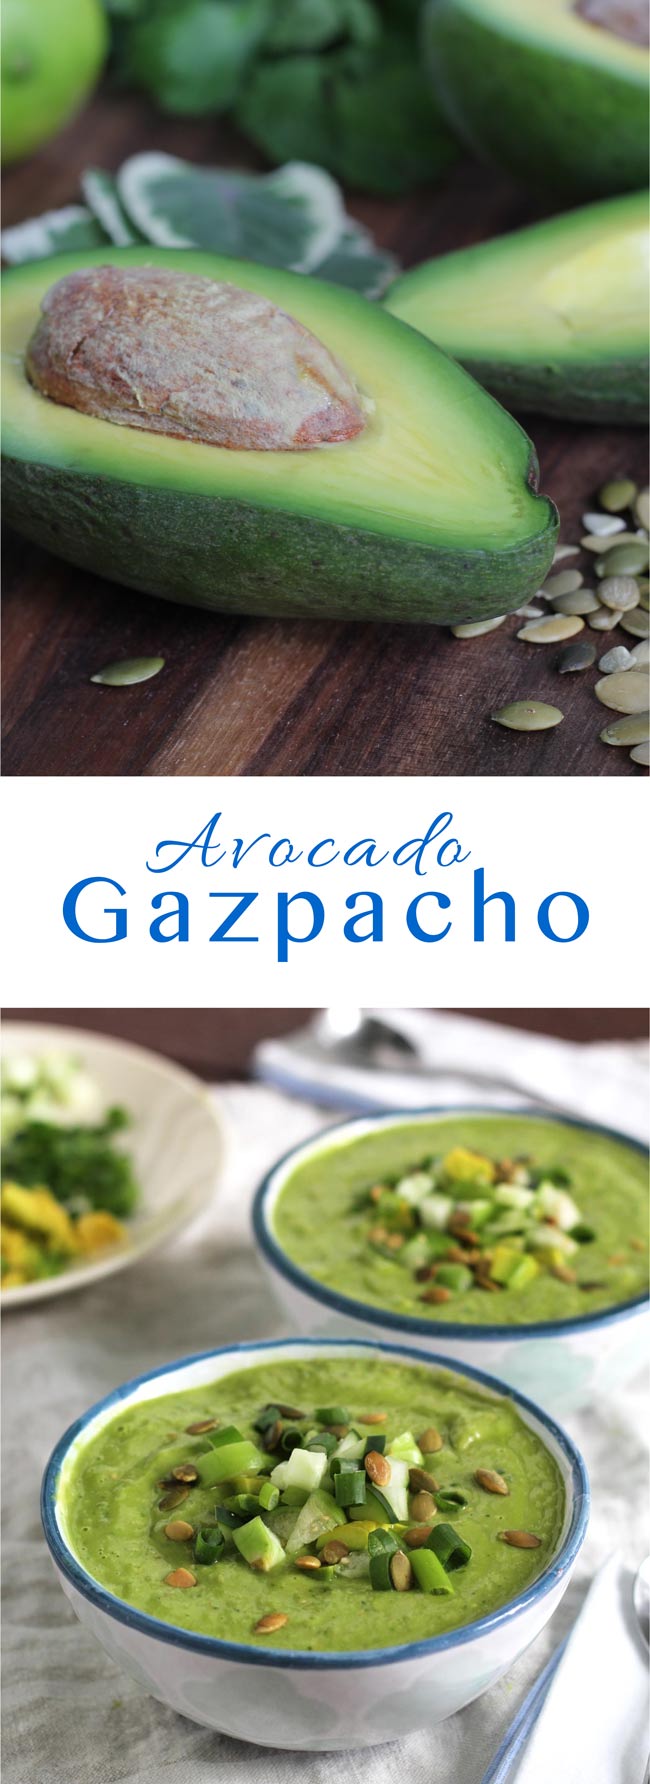 avocadogazpacho